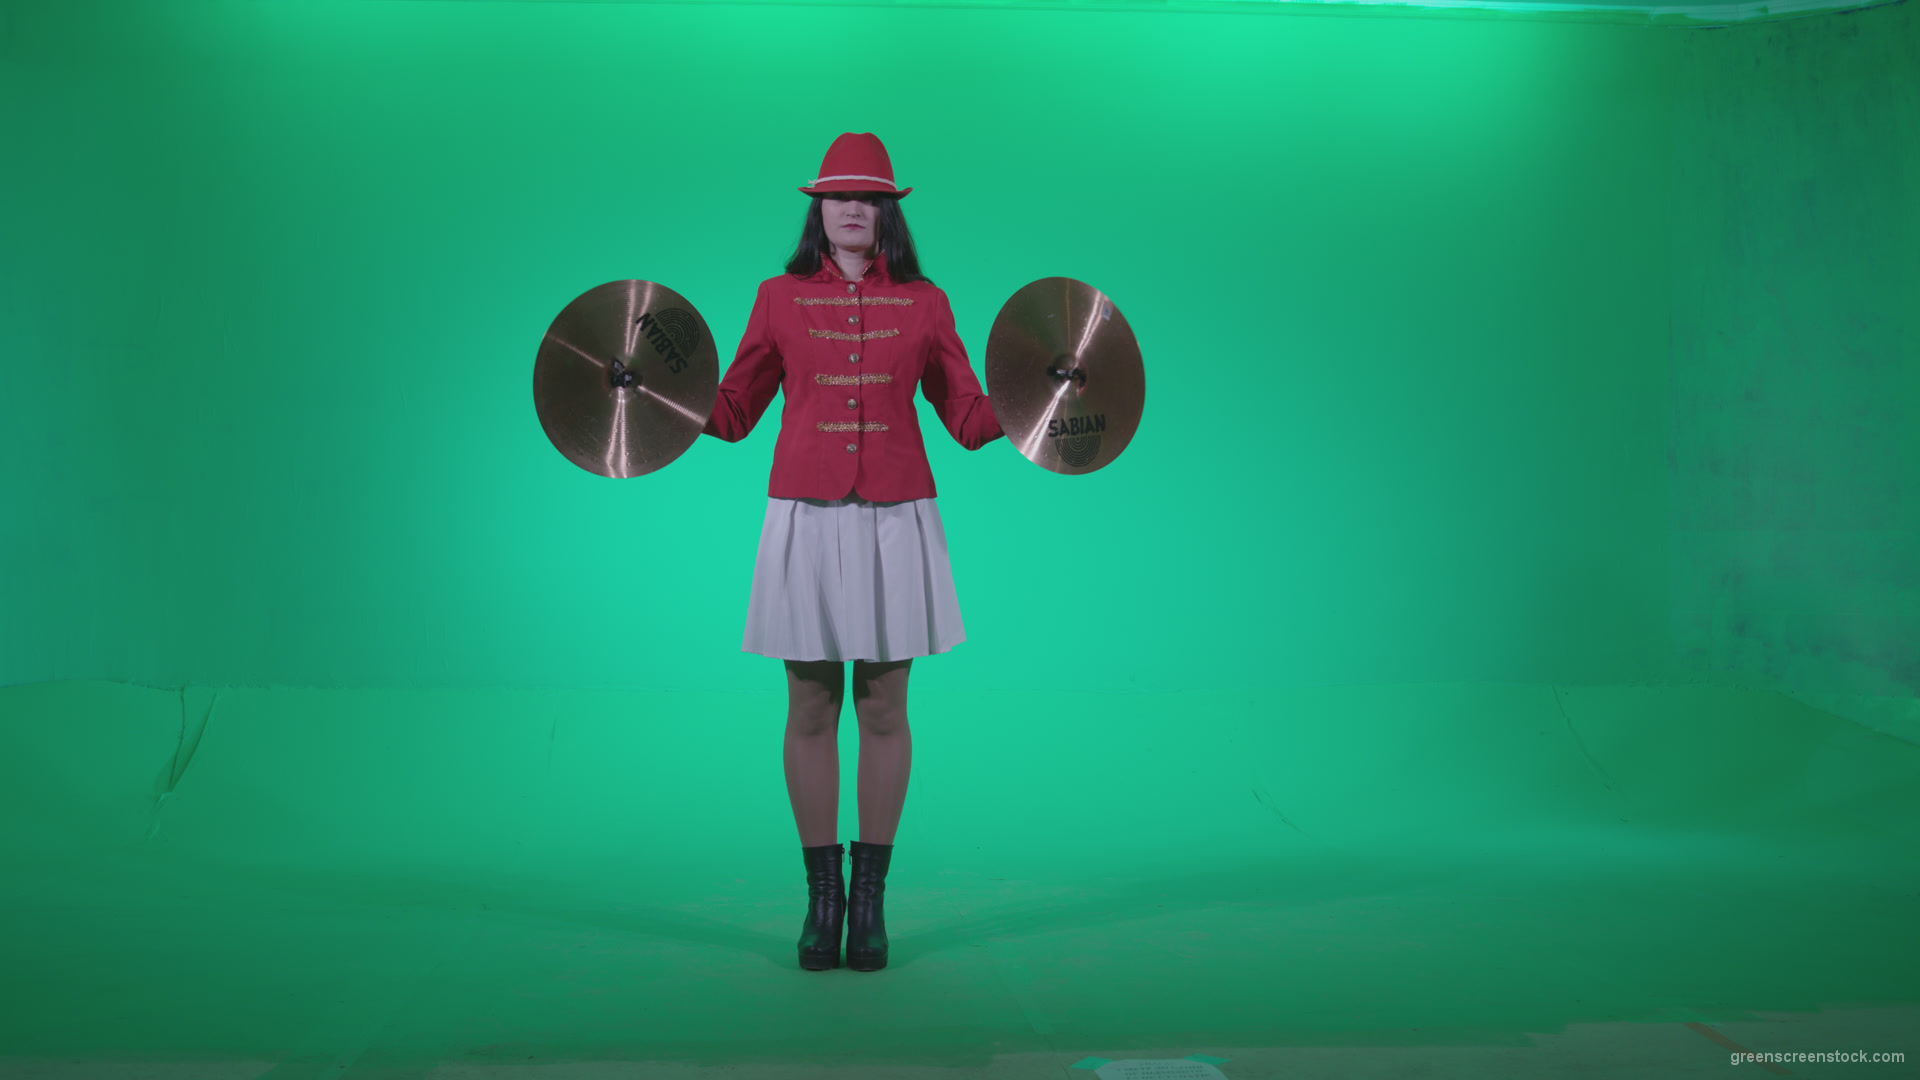 Preteen-Girl-Playing-The-Cymbals-c1_004 Green Screen Stock